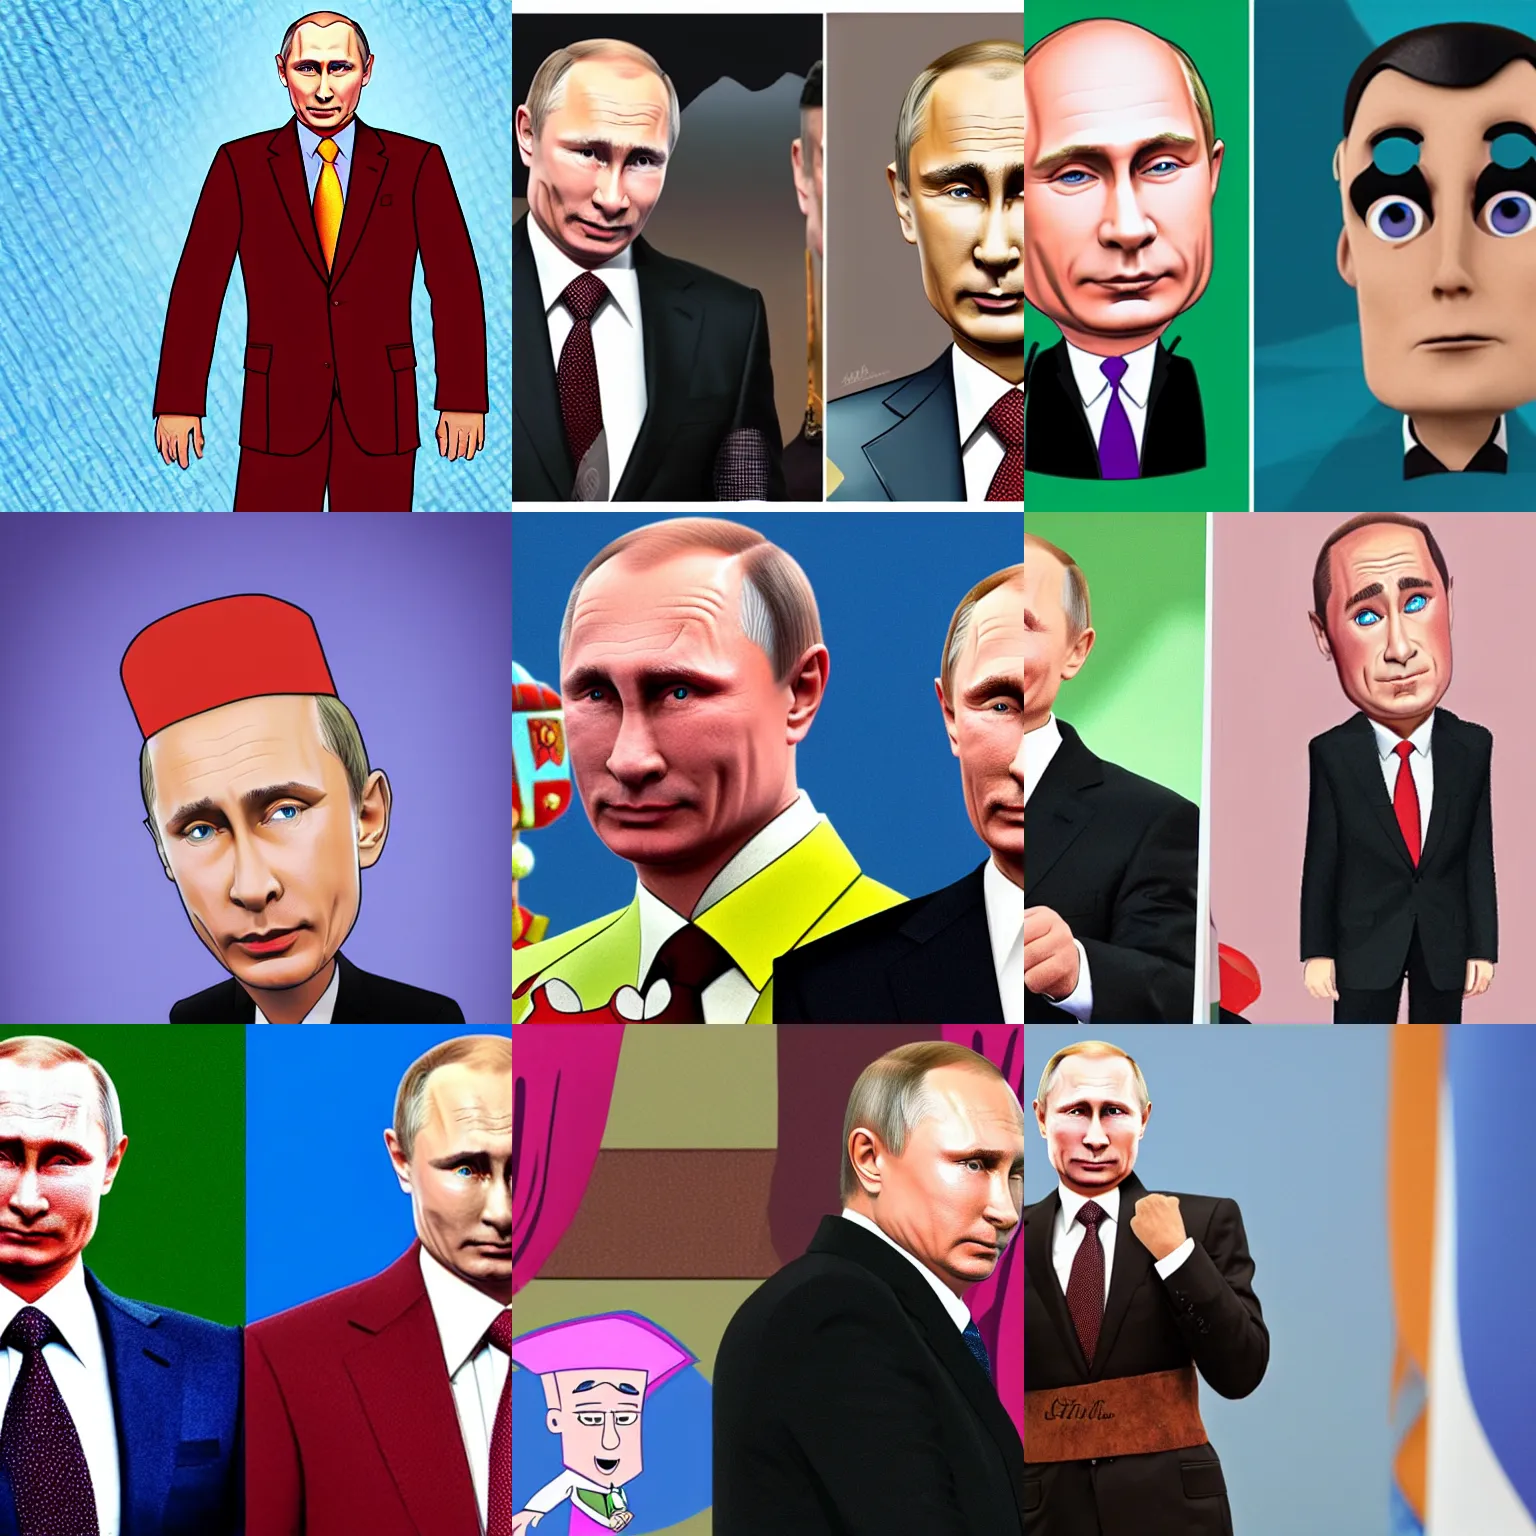 Prompt: Vladimir Putin stylized as Fairly OddParents